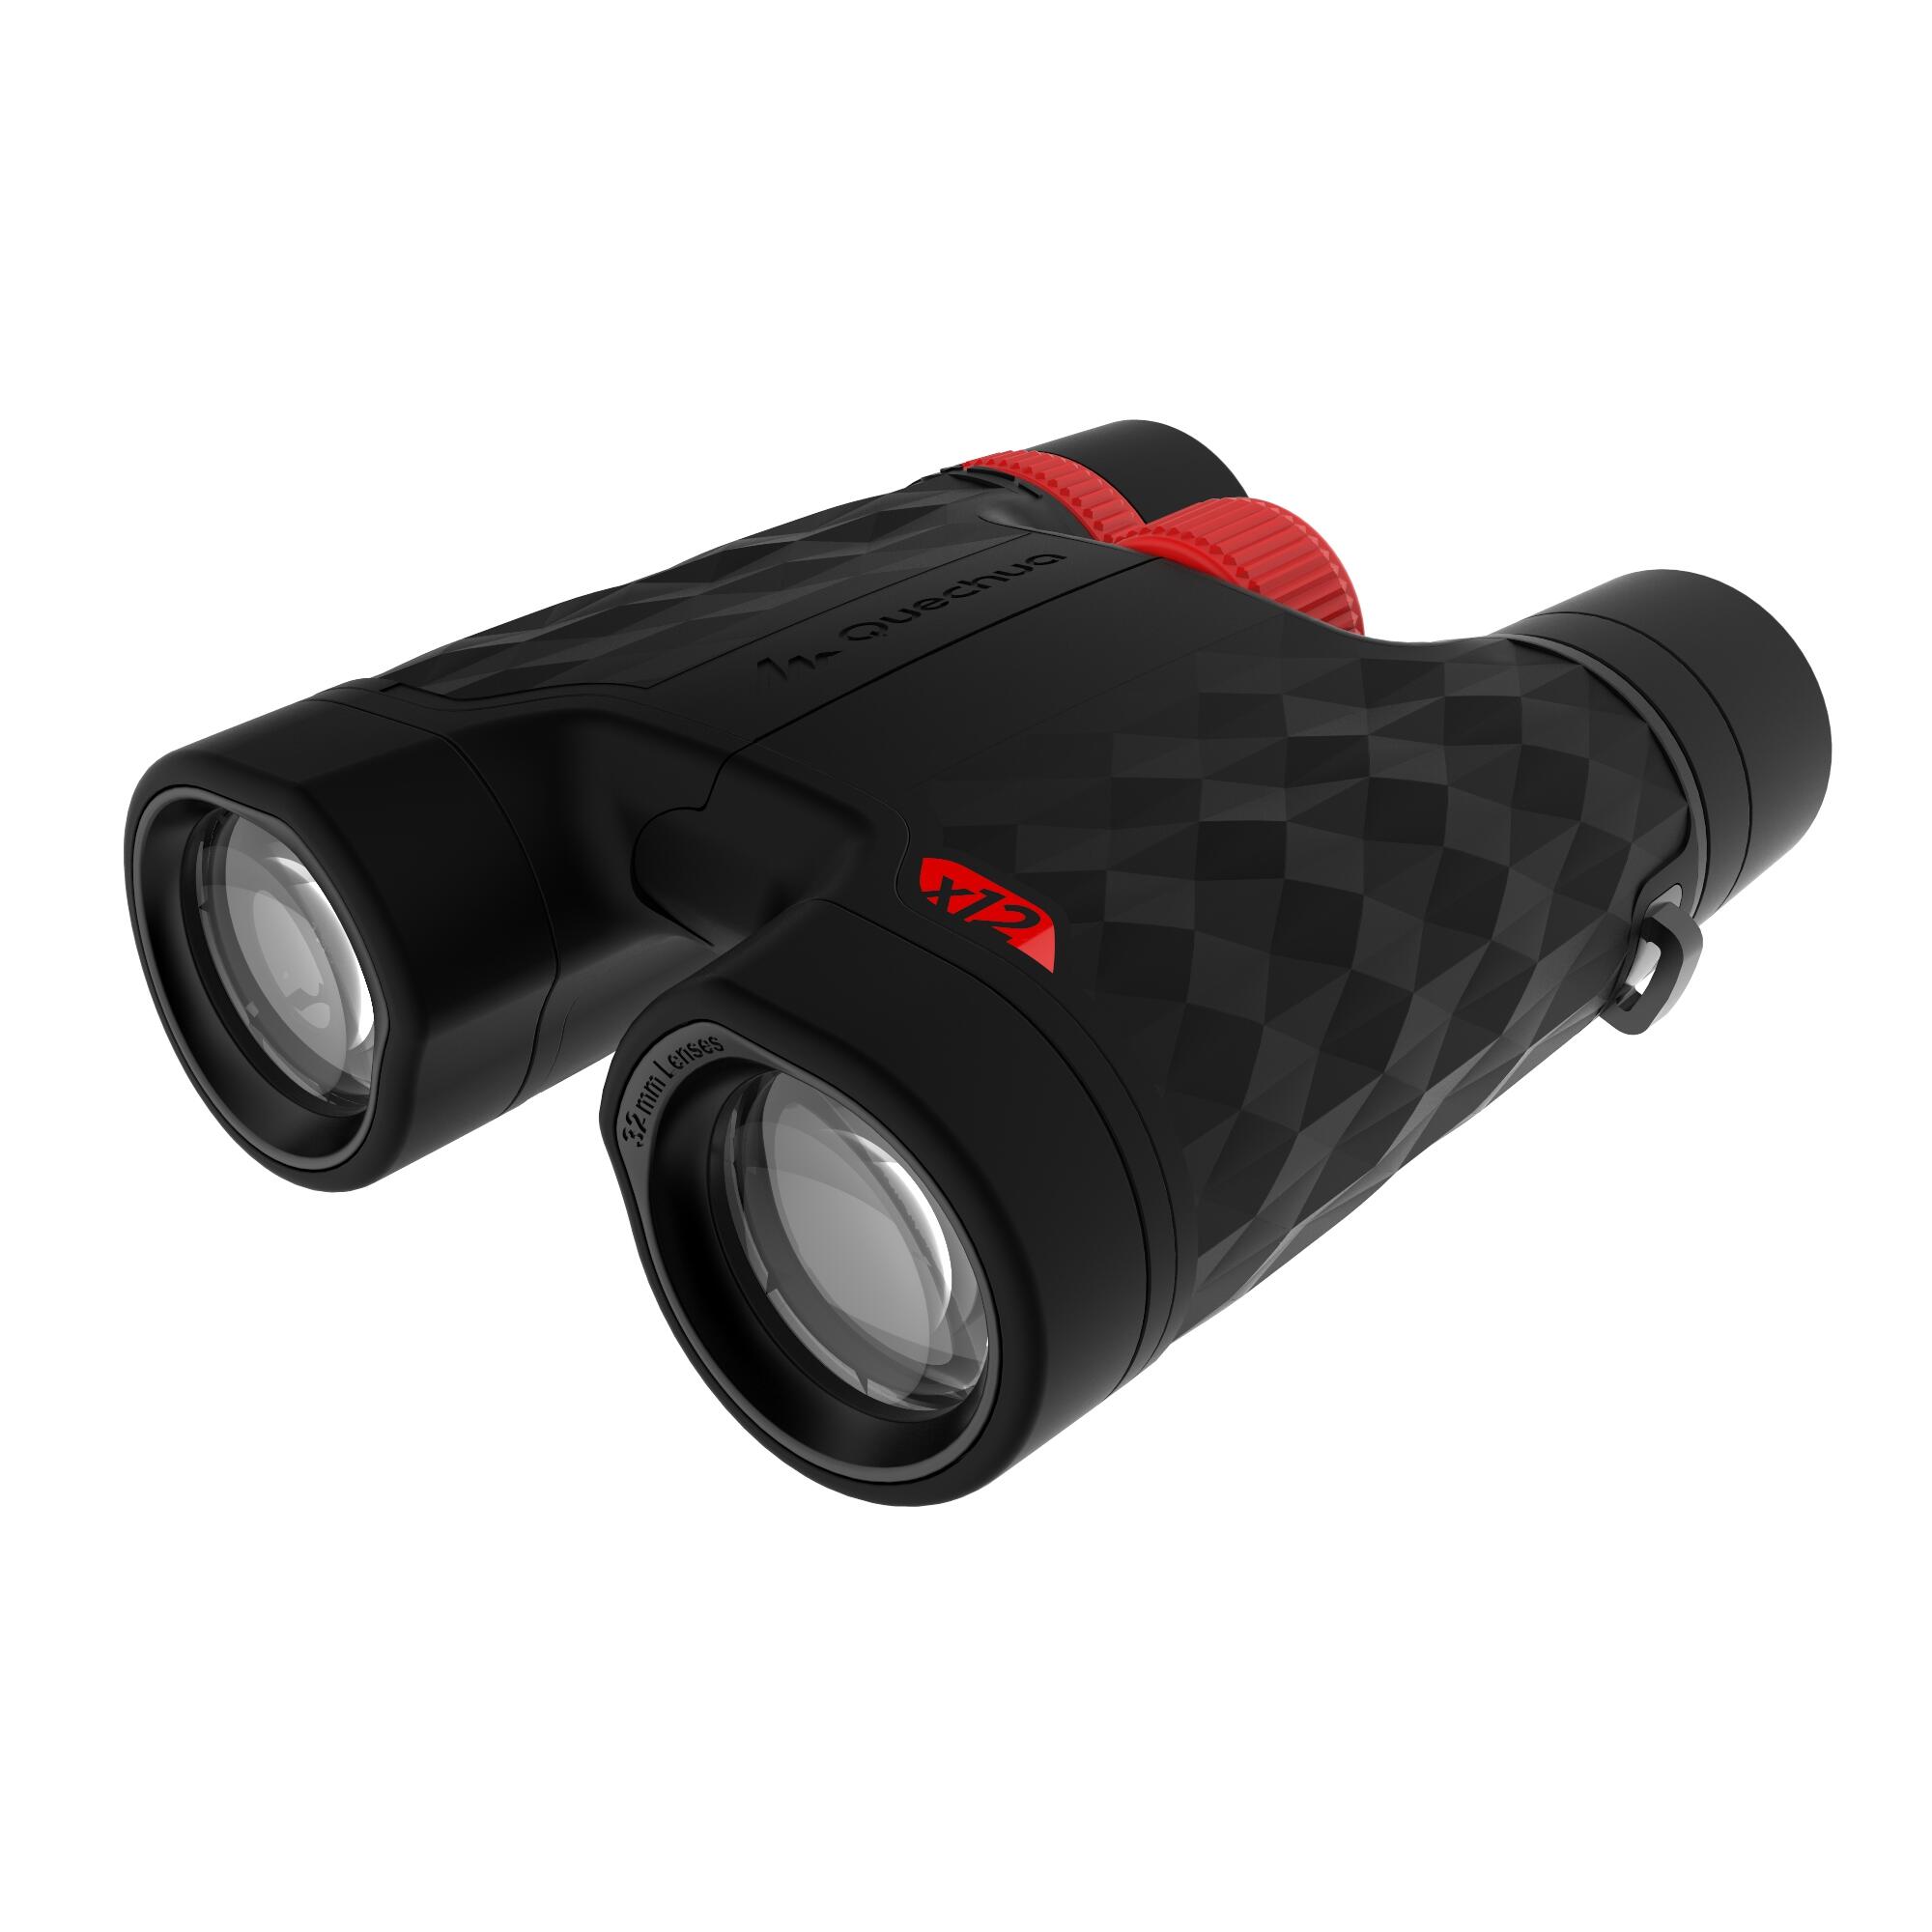 QUECHUA MH B 560 Adjustable Adult Hiking x12 Magnification Binoculars - Black